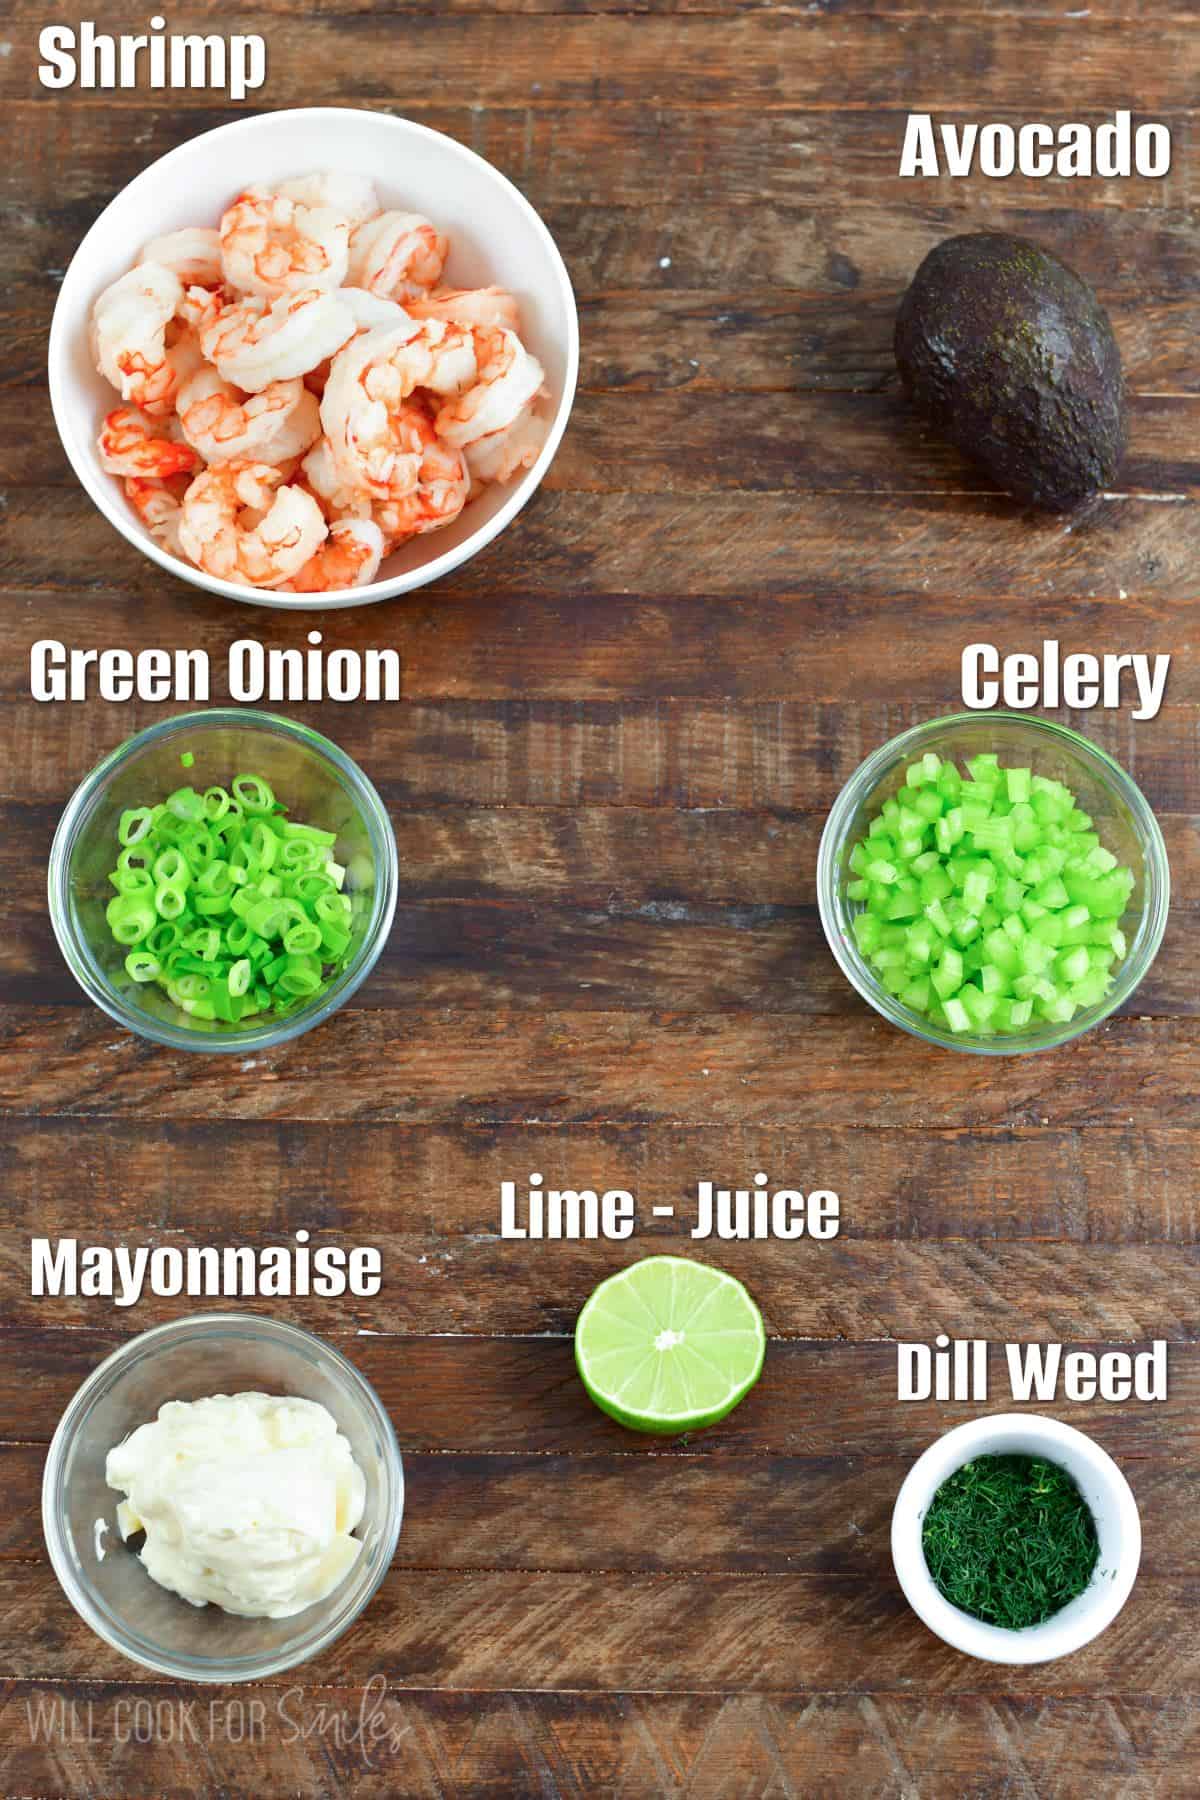 Labeled ingredients for shrimp salad on a wood surface.